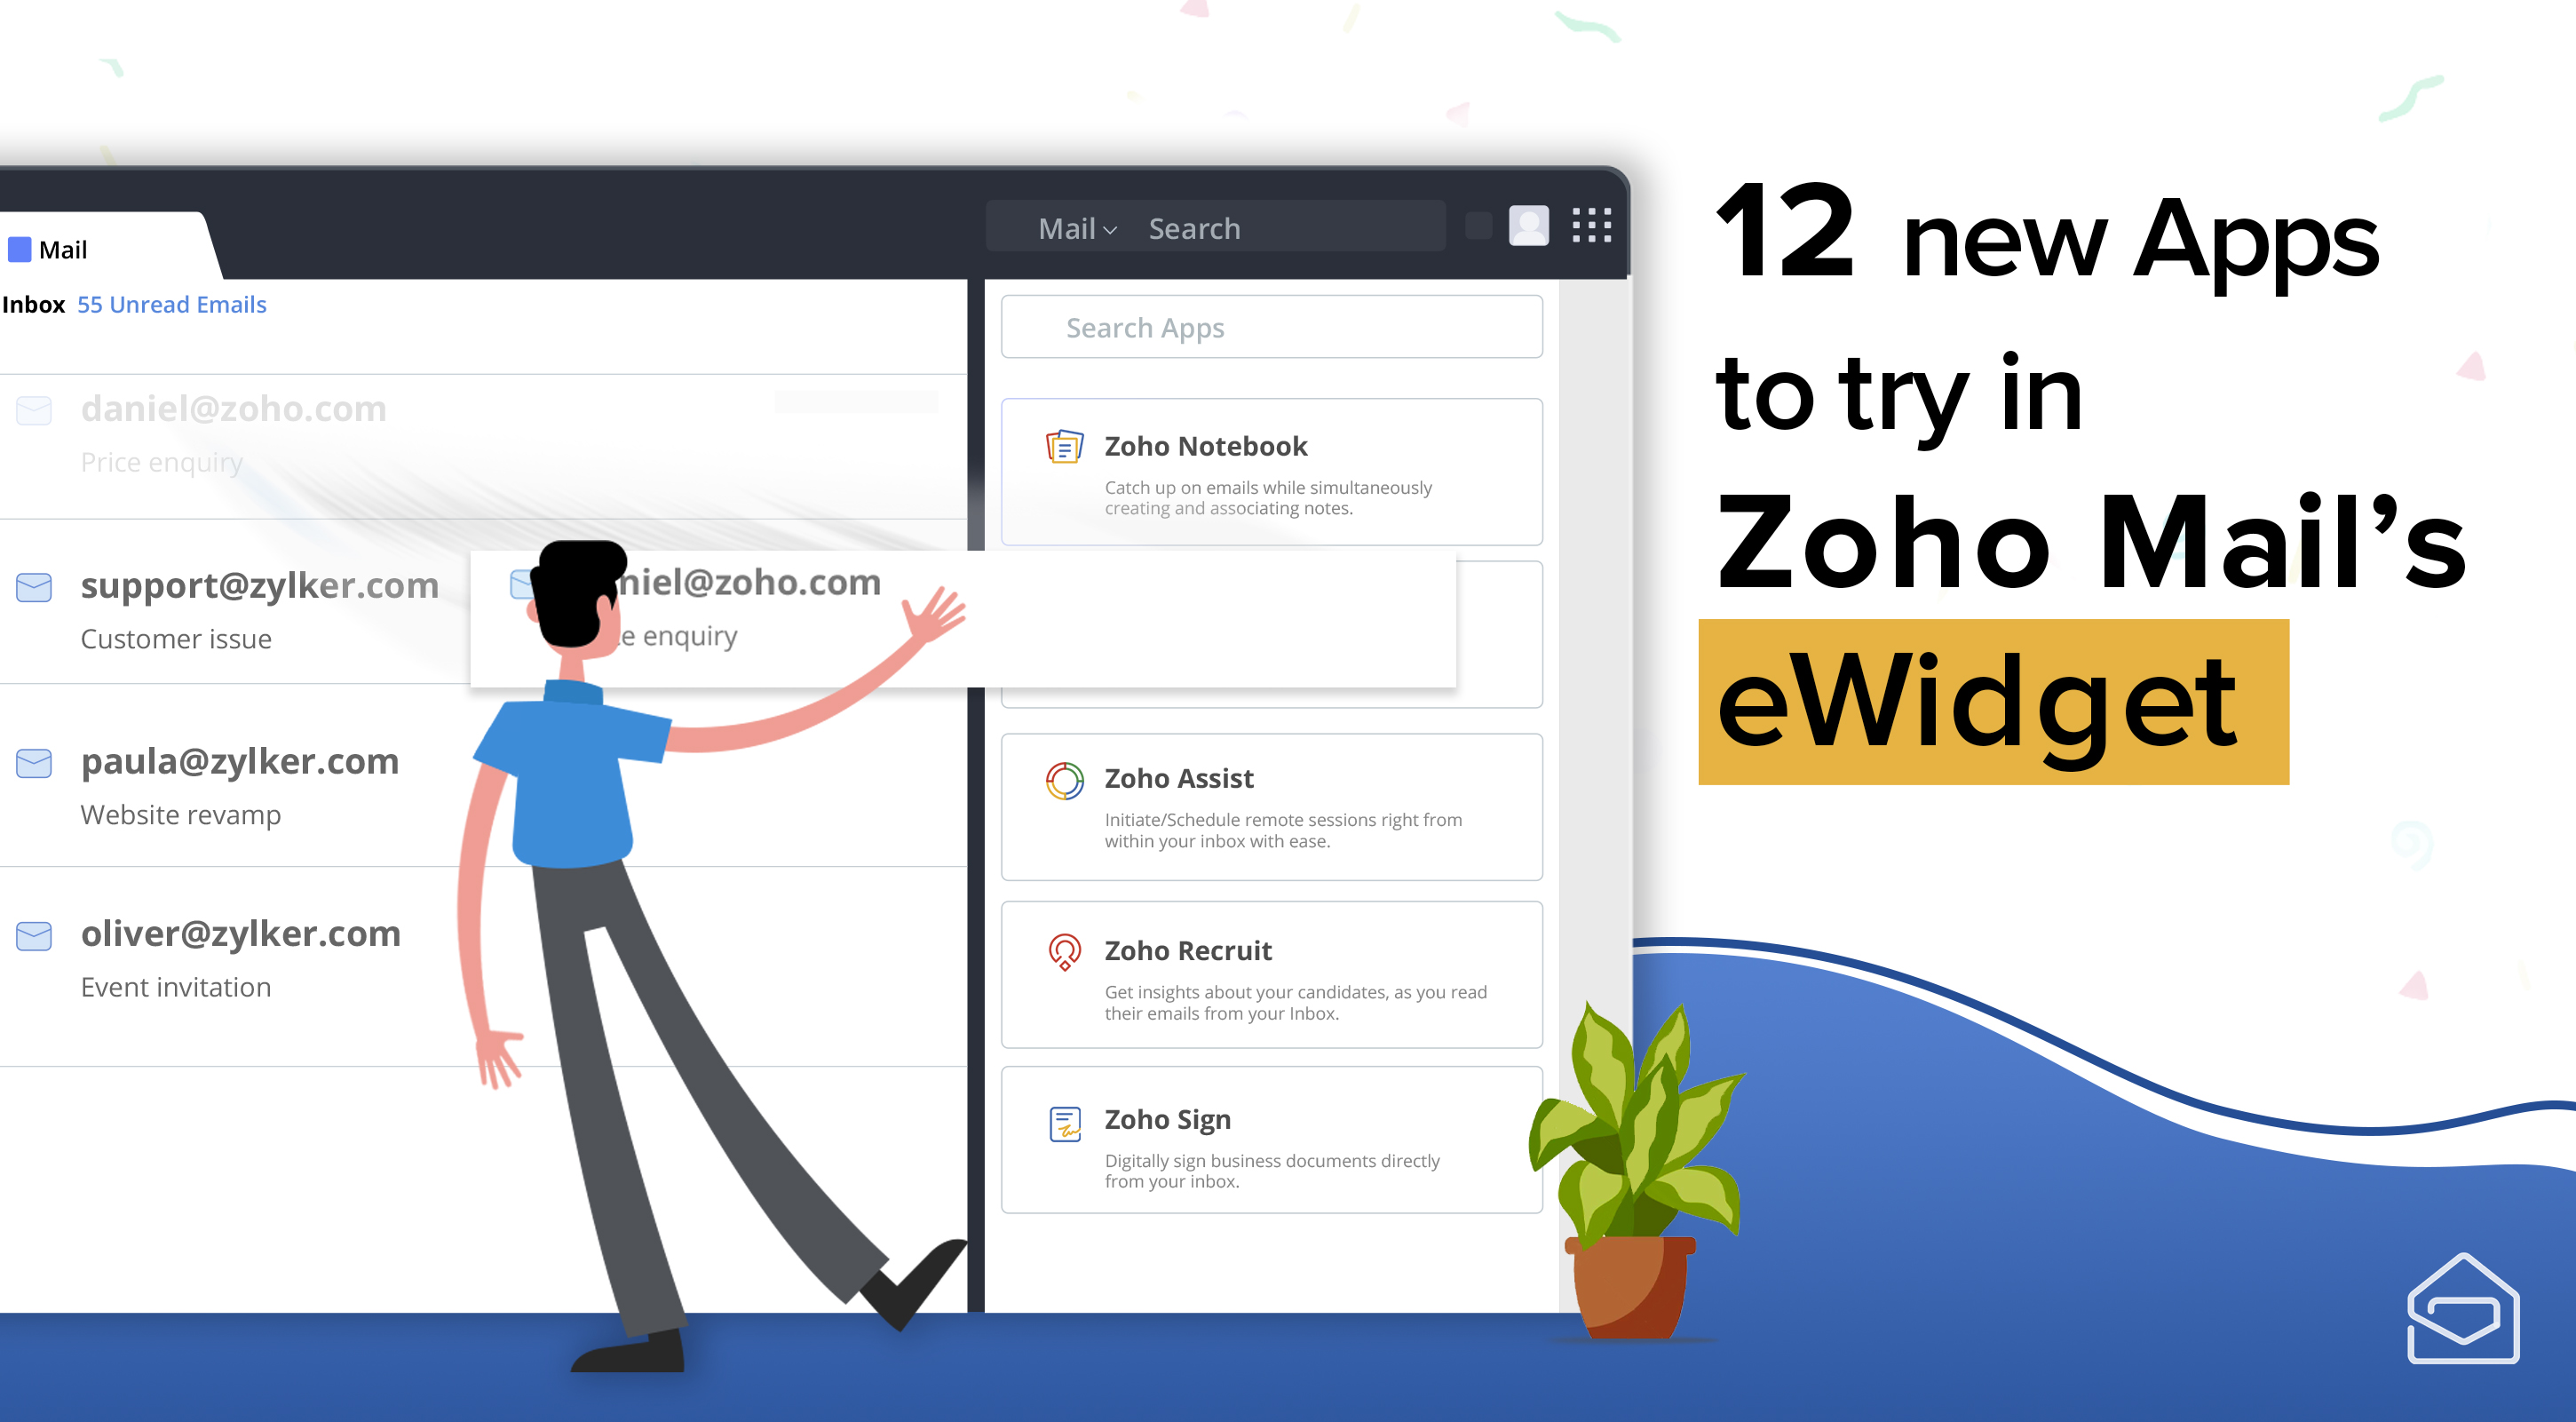 New apps in Zoho Mail's eWidget